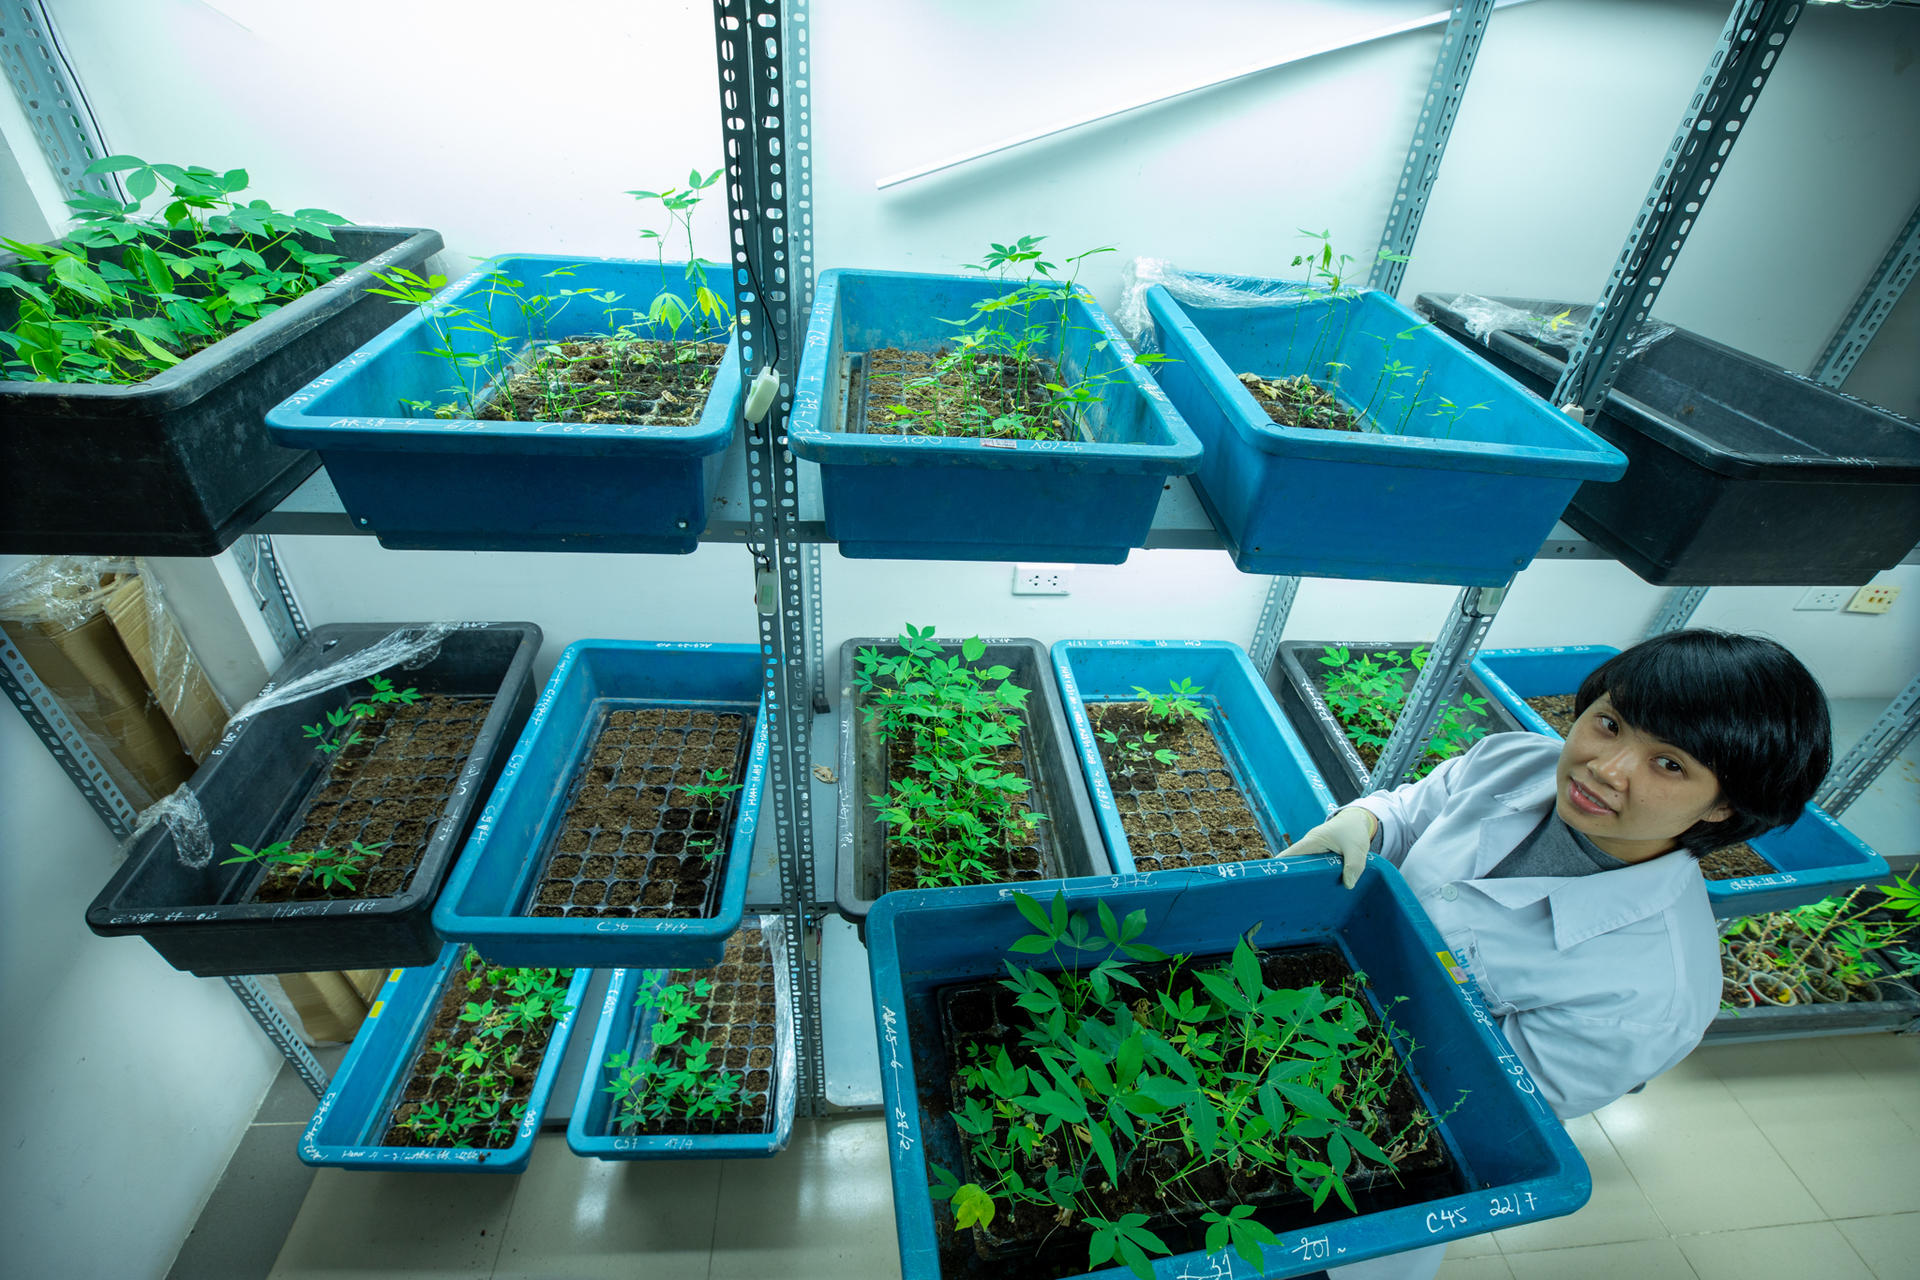 Researcher shows cassava plants in a laboratory of Cassava Program of CIAT in Vietnam